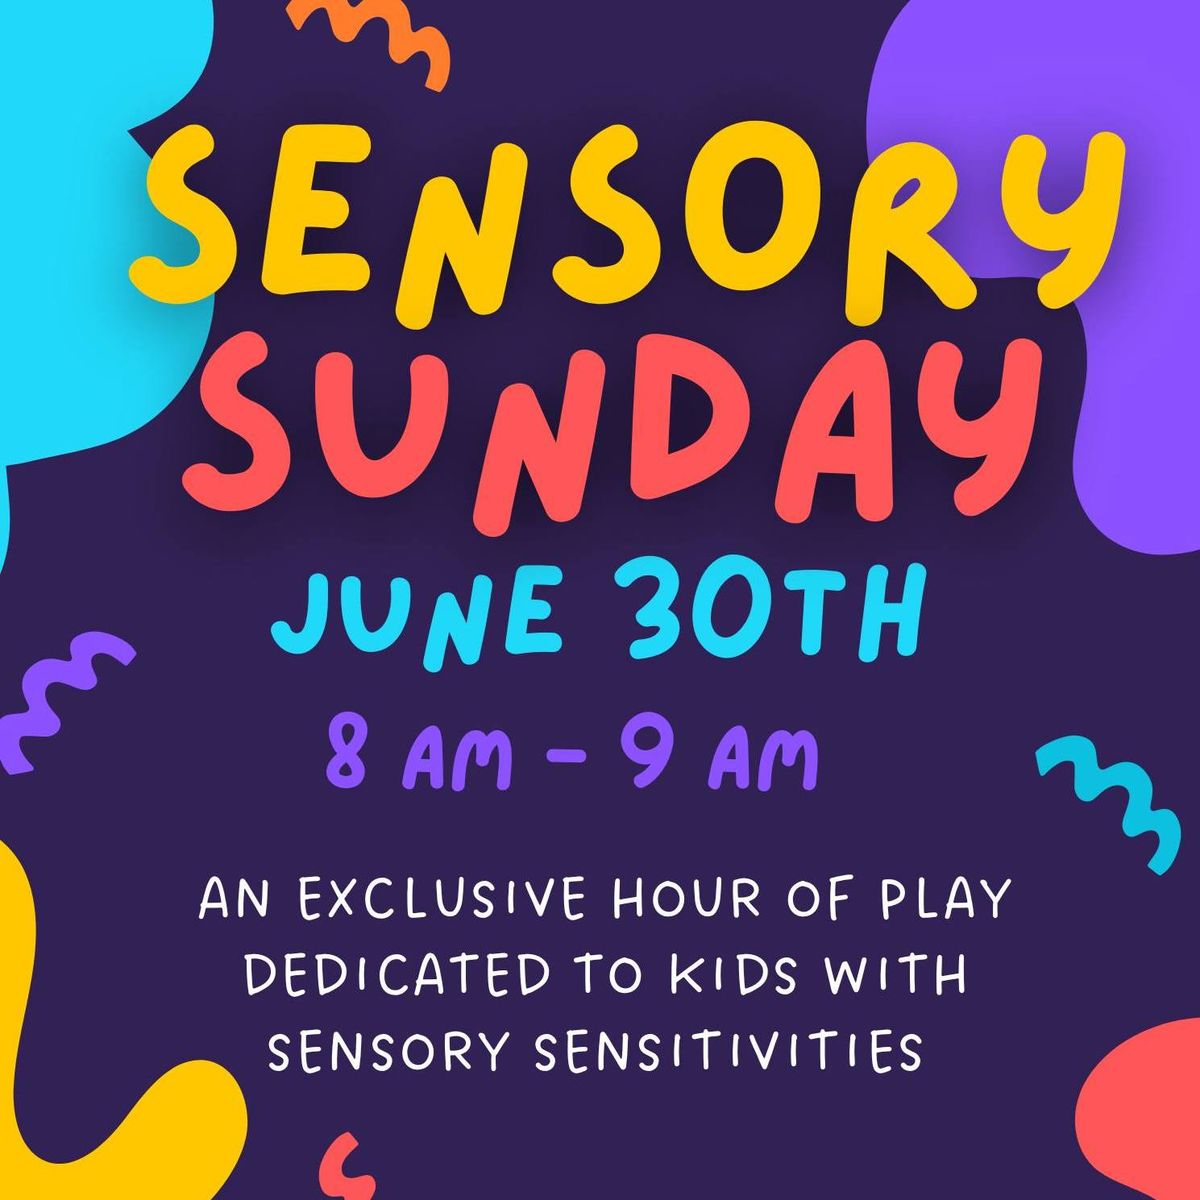 Sensory Sunday